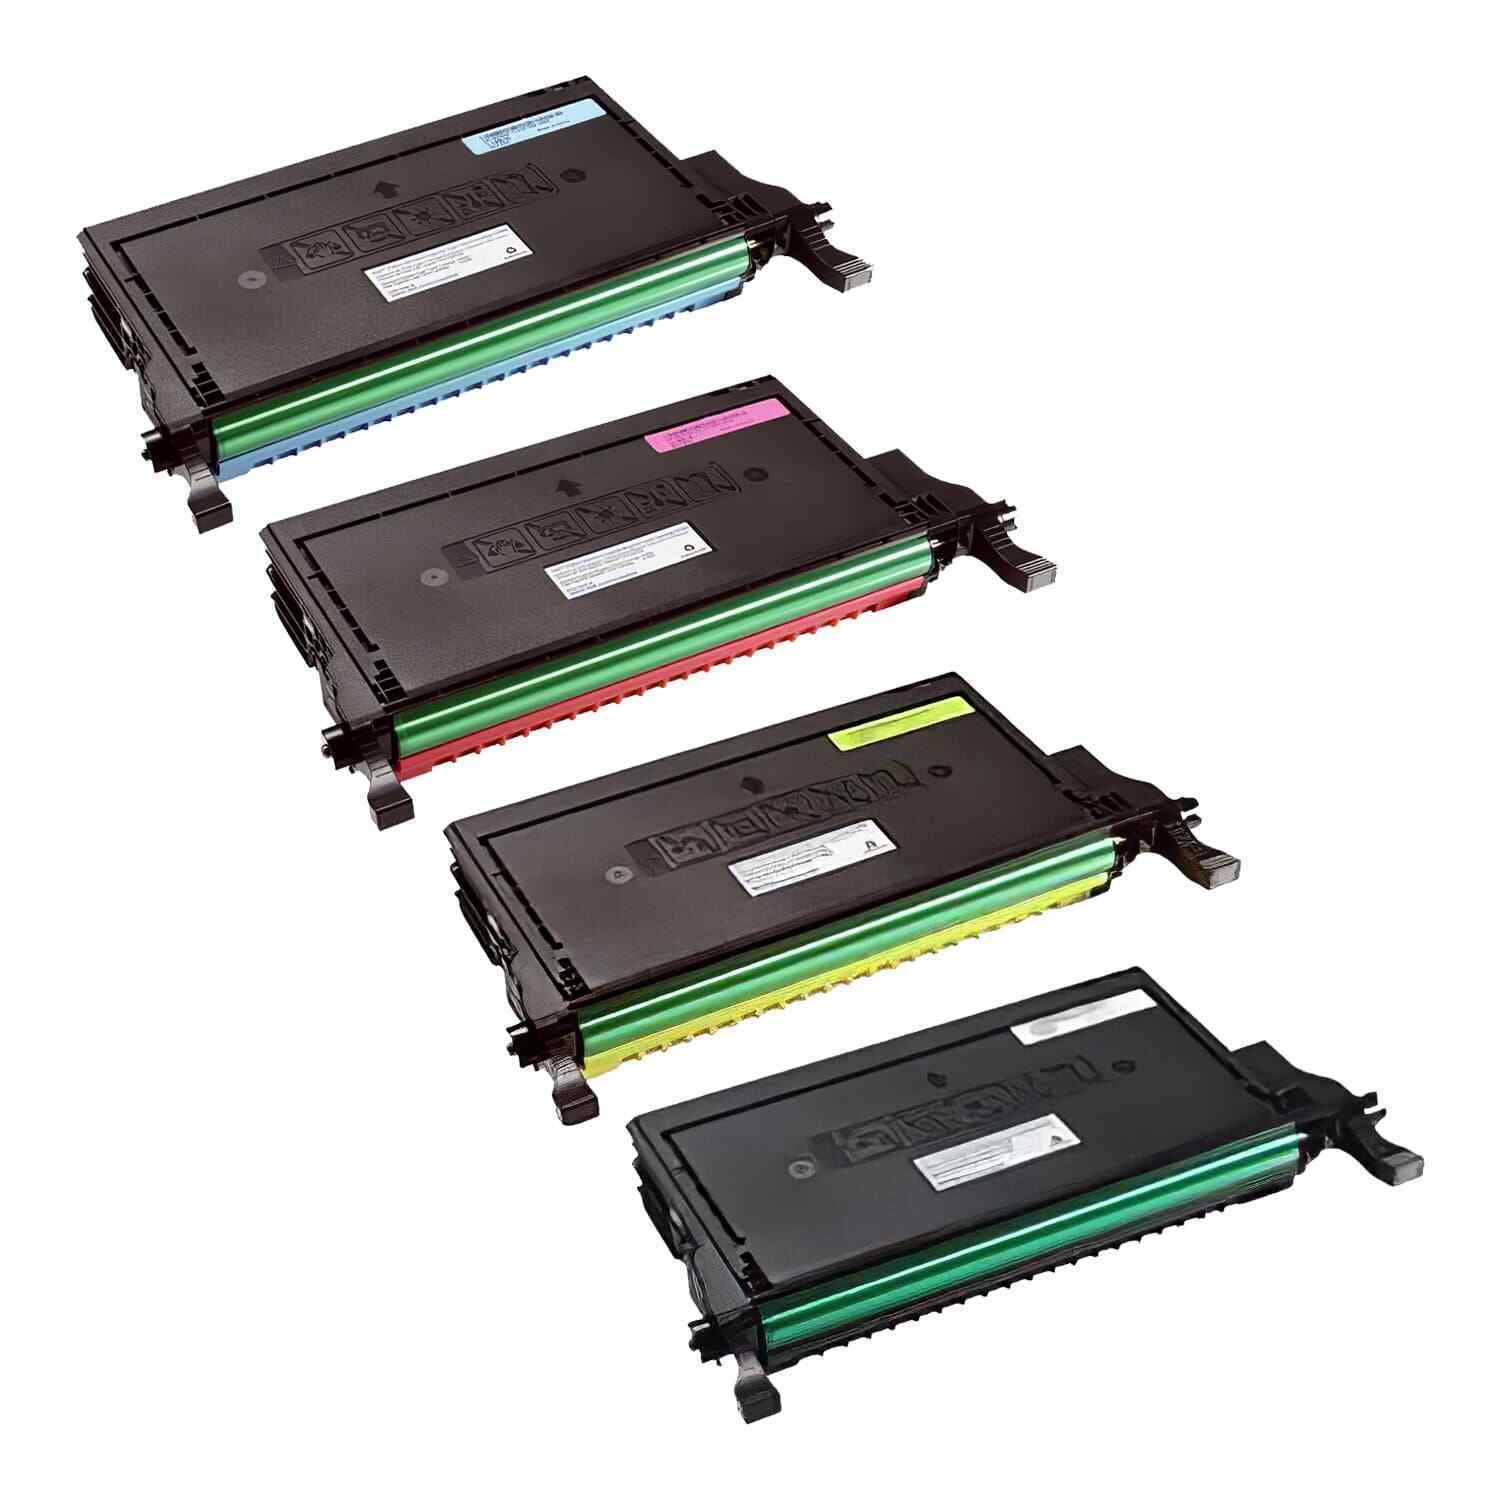 New 4 X Color Toner Cartridges for Dell  2145 2145cn Printer  330-3785 330-3786 